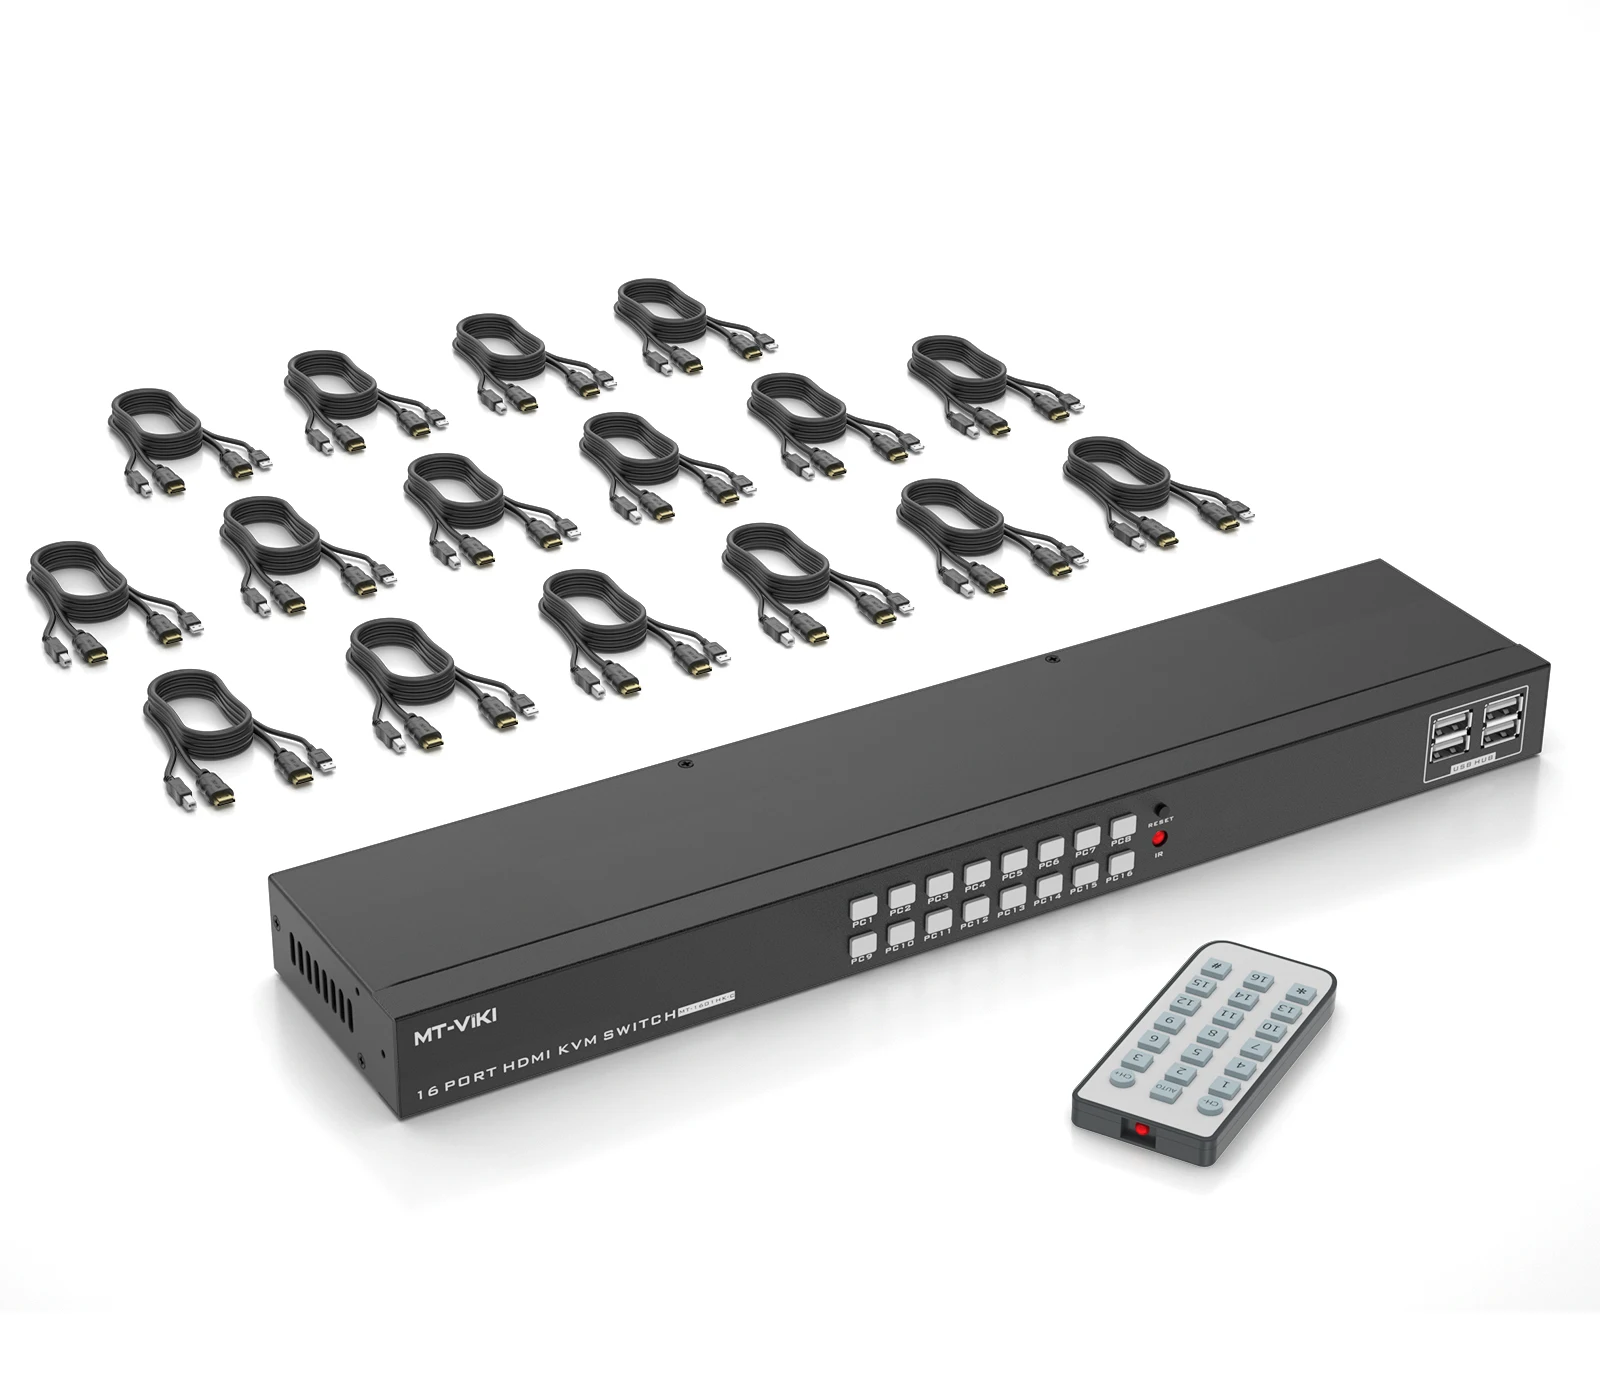 MT-VIKI 8 Port KVM Switch HDMI, 4K@30Hz 1U Rack Mount KVM HDMI Switch w/IR  Remote & Wire-Desktop Controller & 8 HDMI KVM Cables & Rack Ears